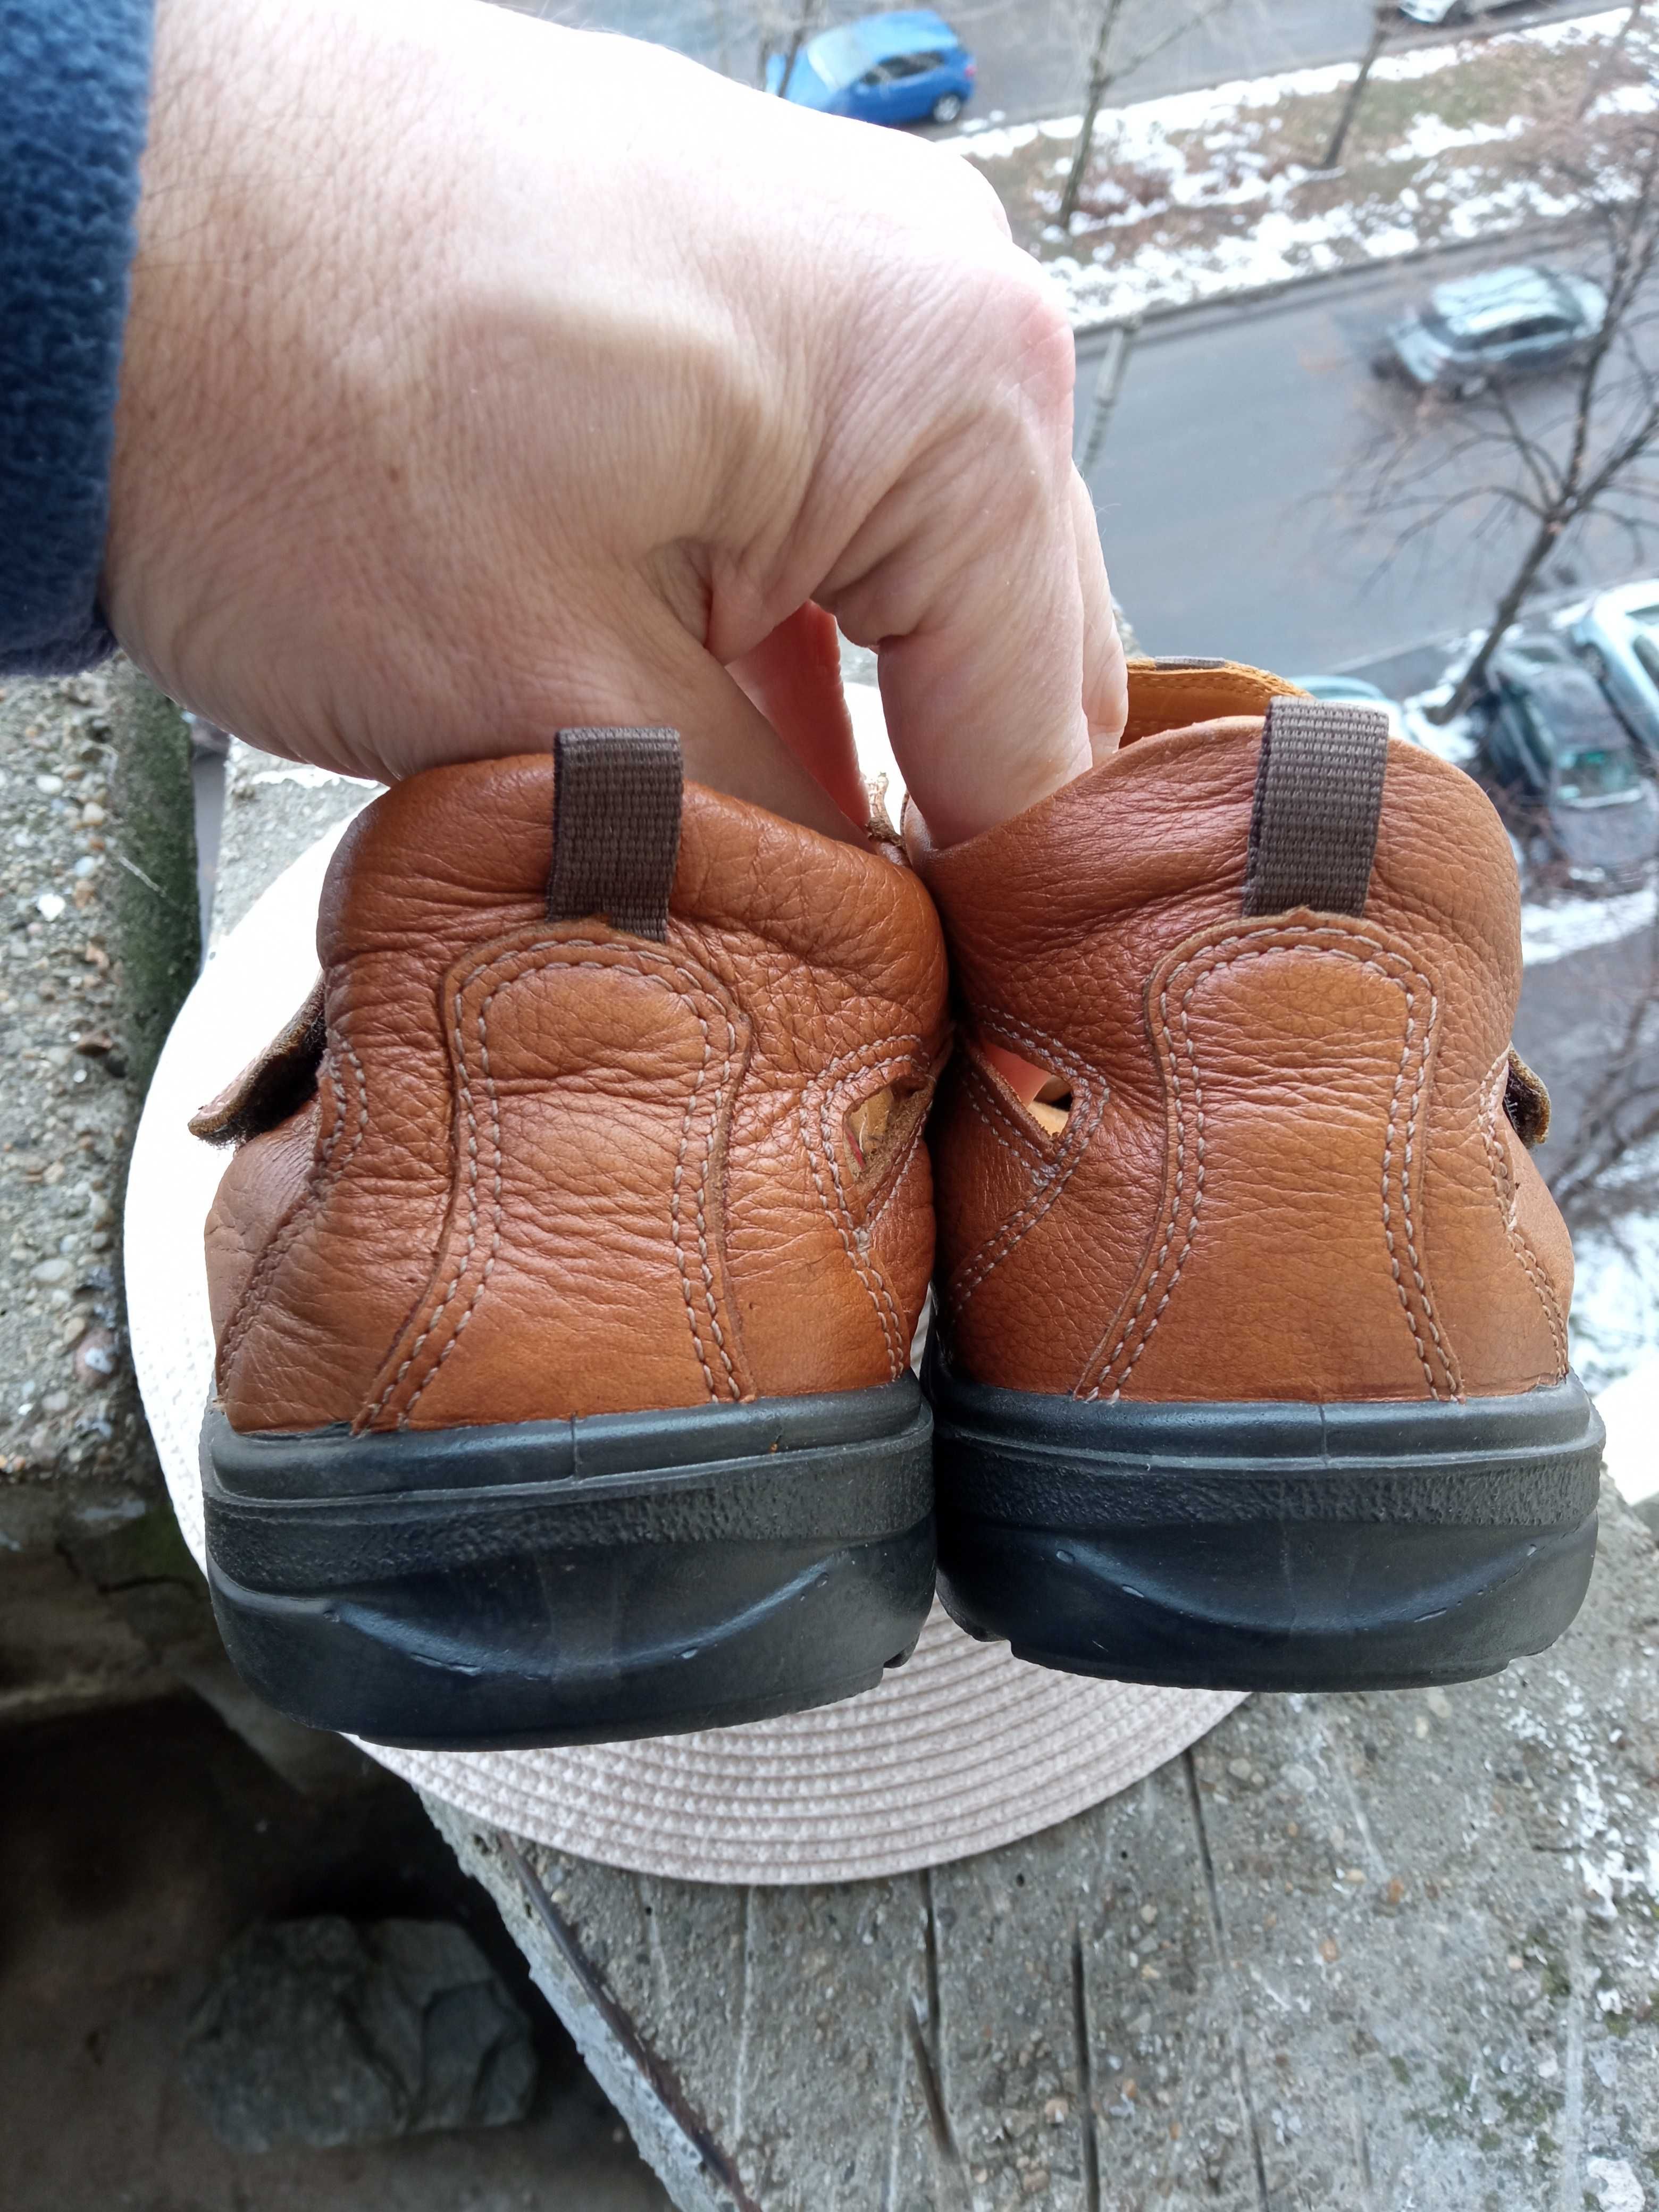 Sandale piele Jomos Air Comfort, marime 47, (31 cm) made in Germany.